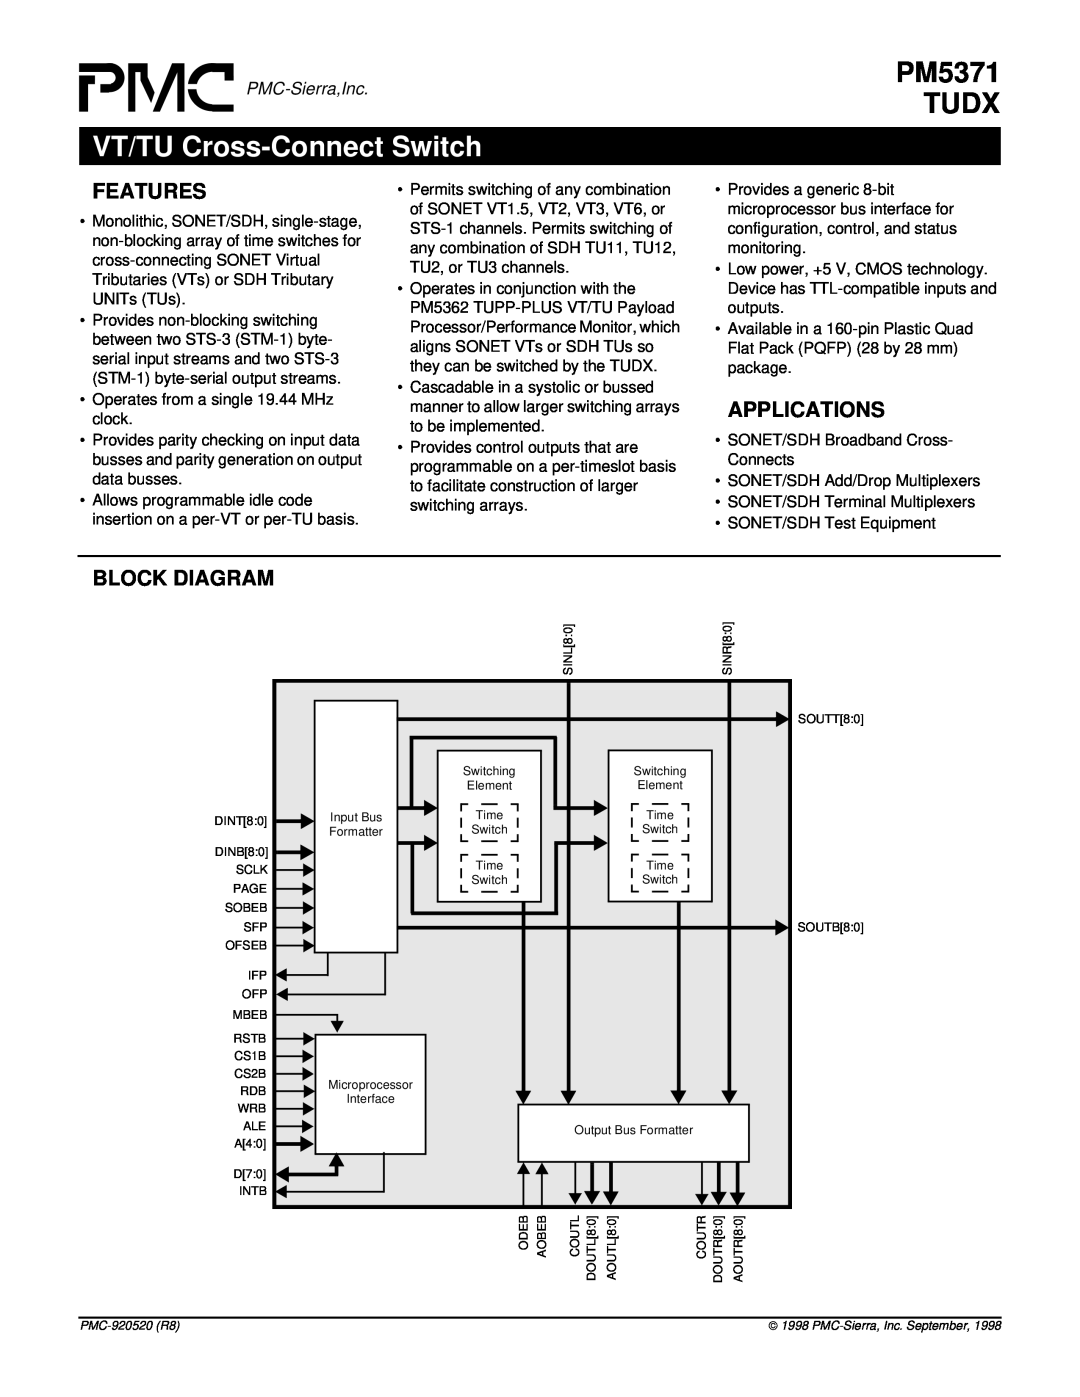 PMC-Sierra manual VT/TU Cross-Connect Switch, PM5371 TUDX, Features, Applications, Block Diagram, PMC-Sierra,Inc 